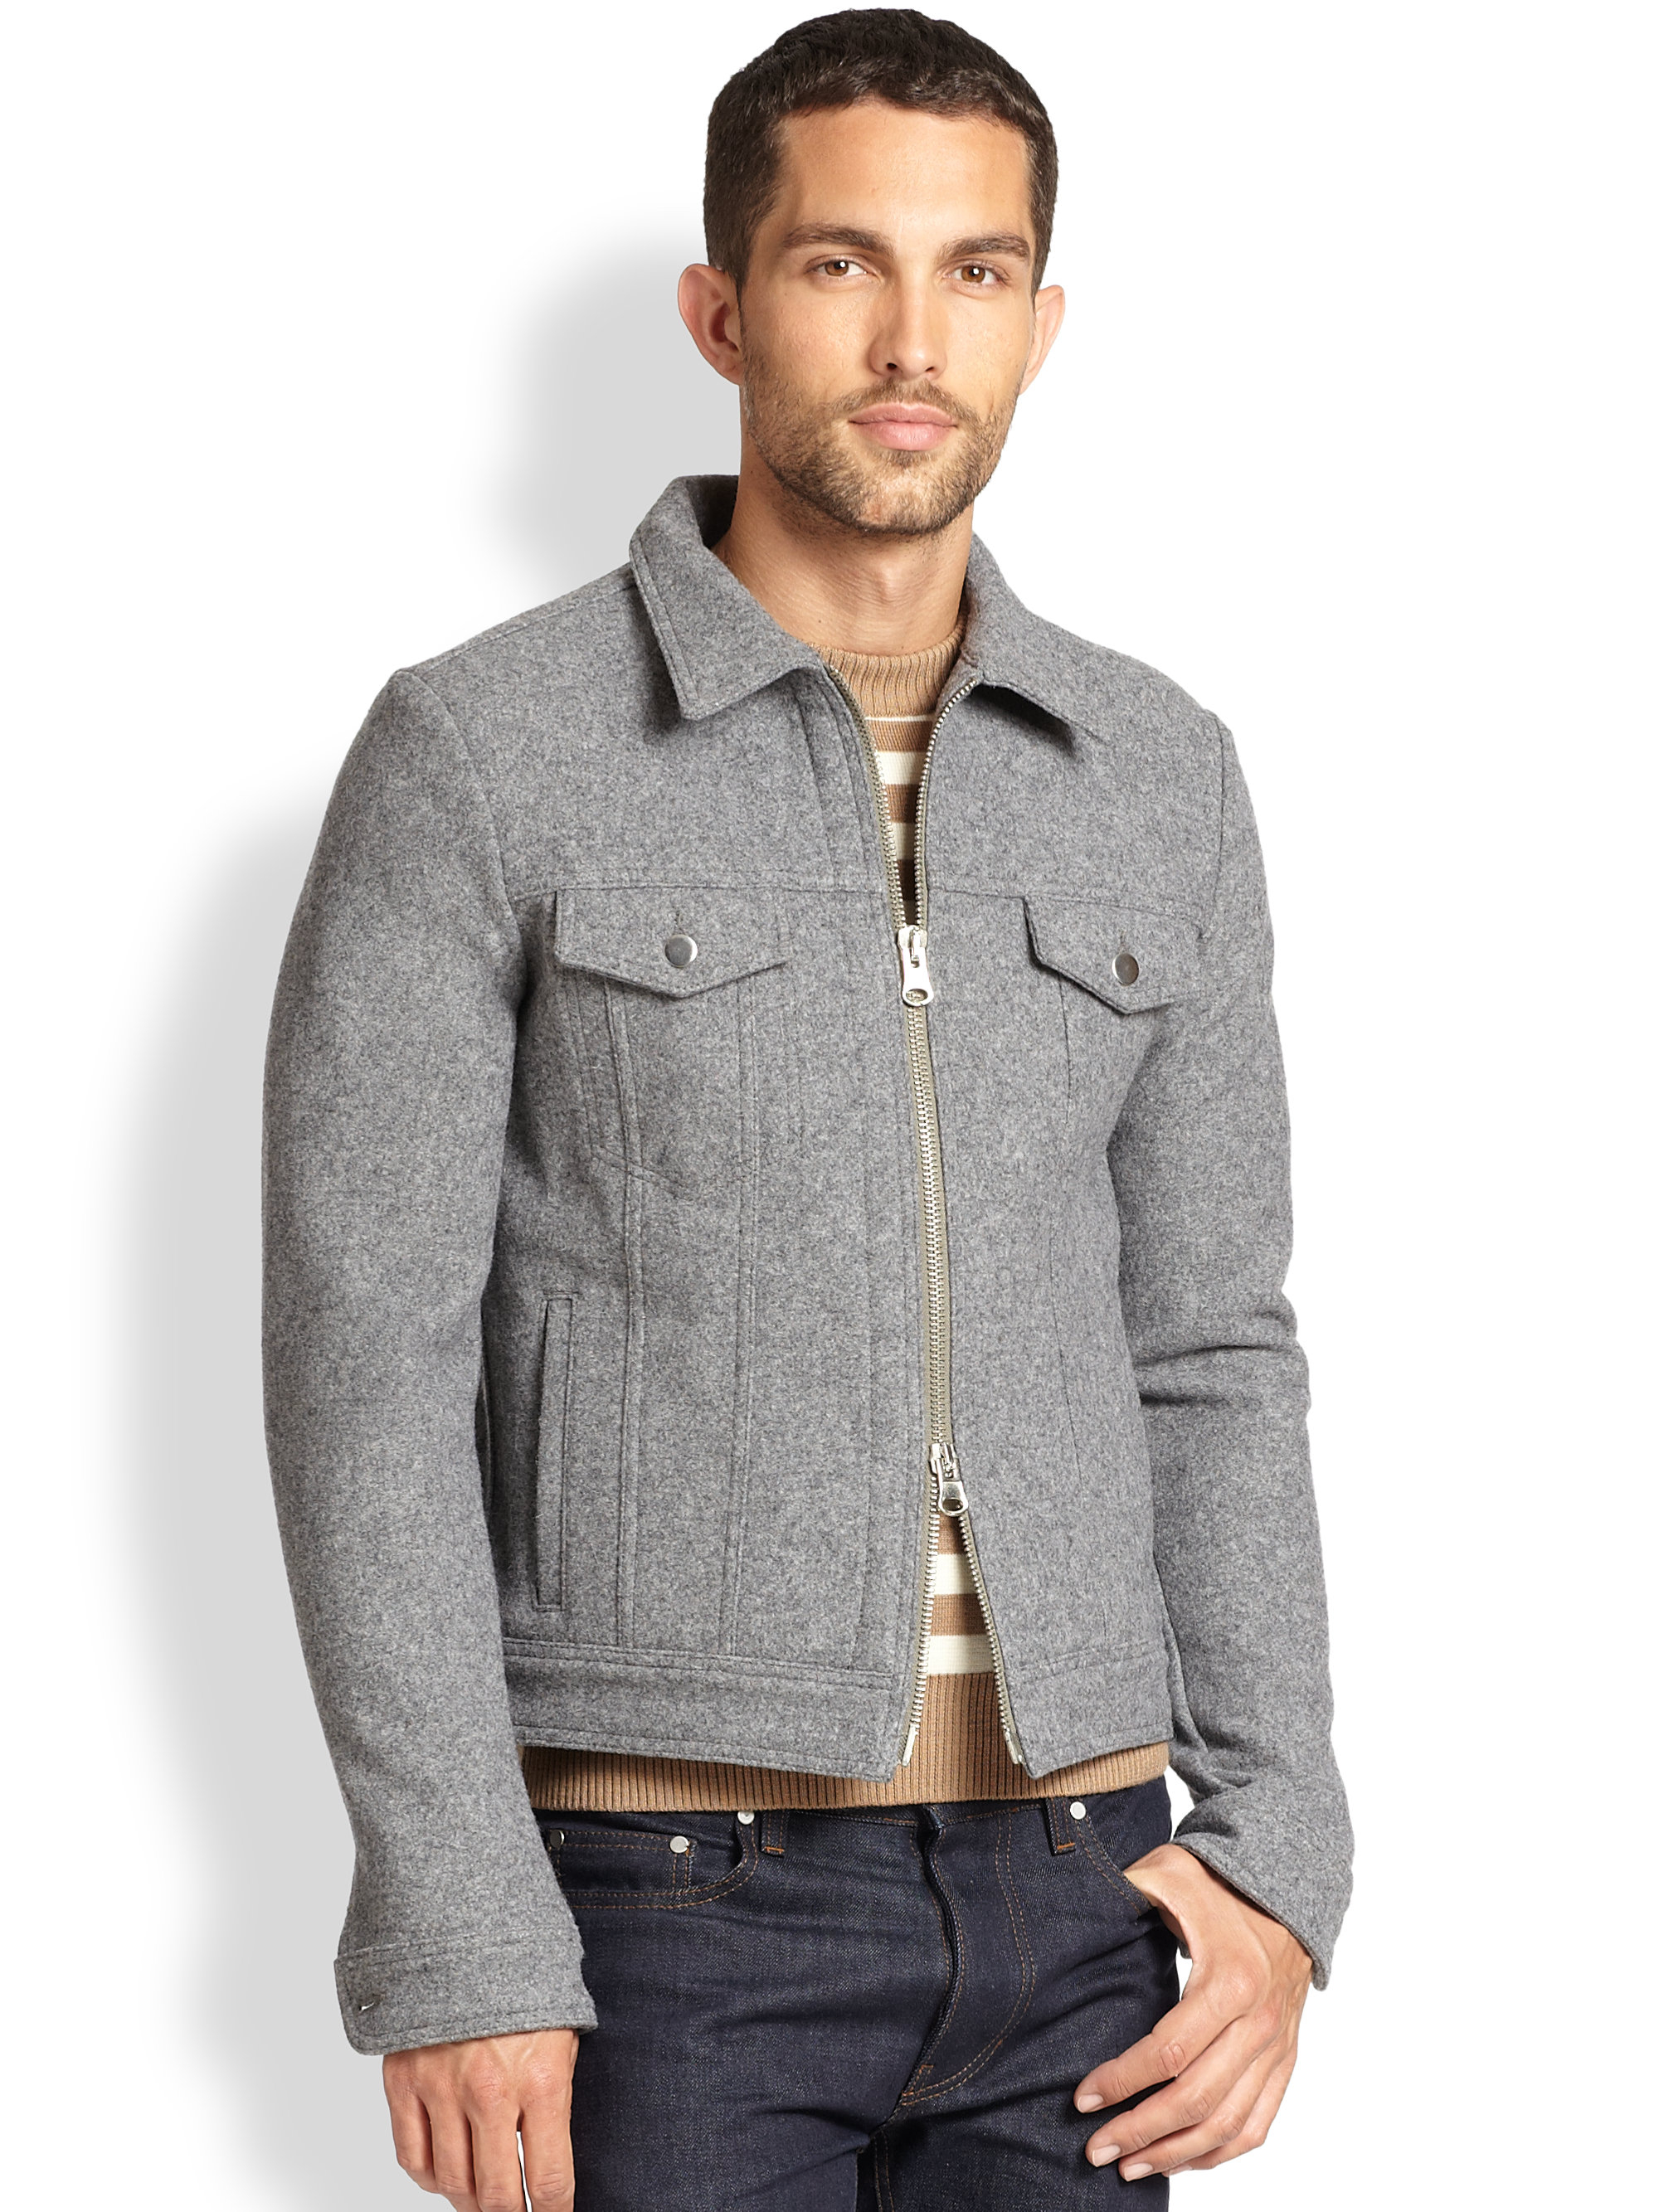 AMI Wool Jacket in Gray for Men - Lyst